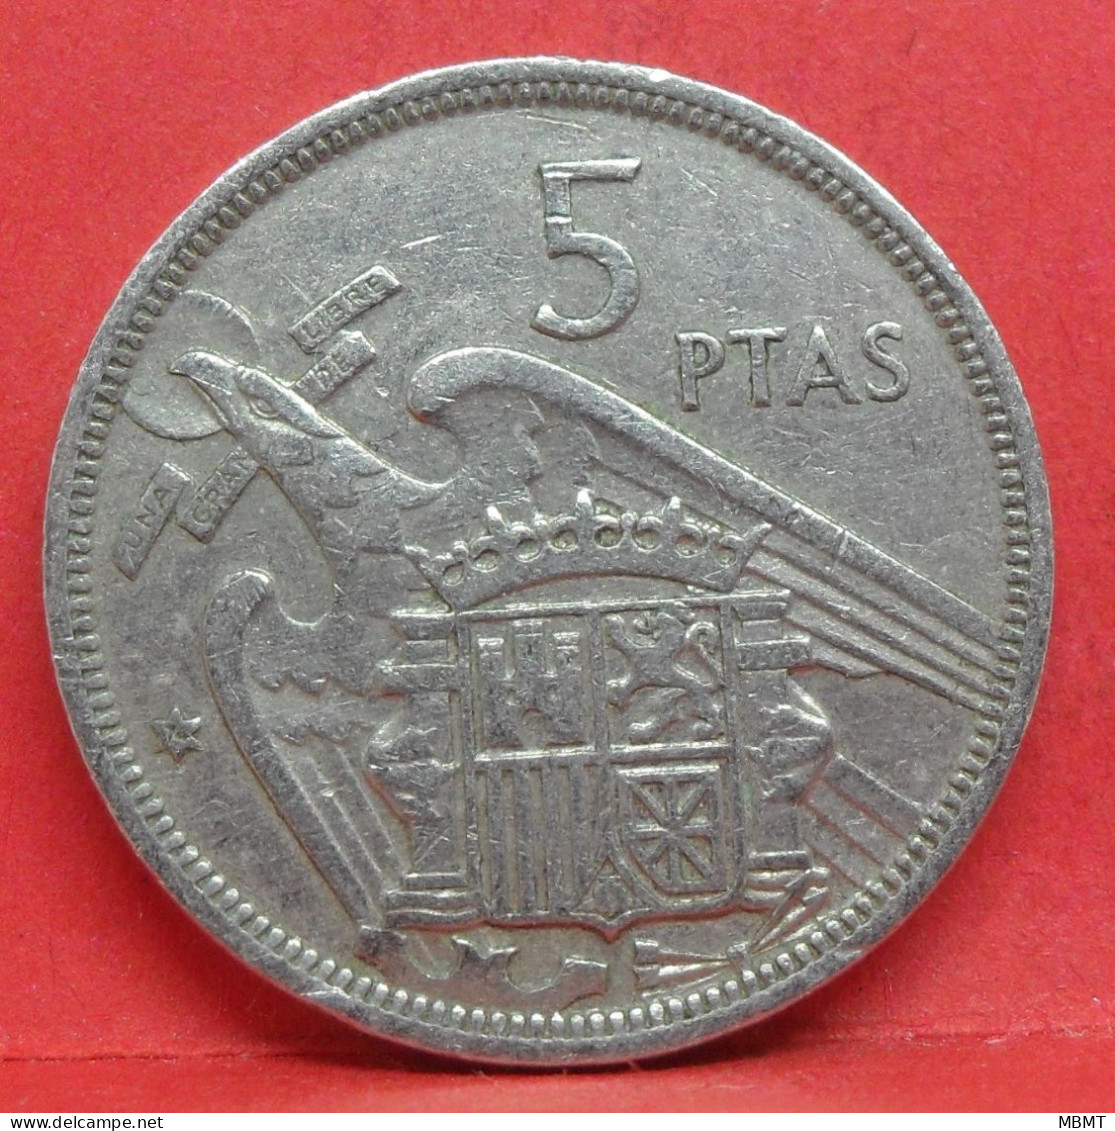 5 Pesetas 1957 étoile 74 - TB - Pièce Monnaie Espagne - Article N°2361 - 5 Pesetas